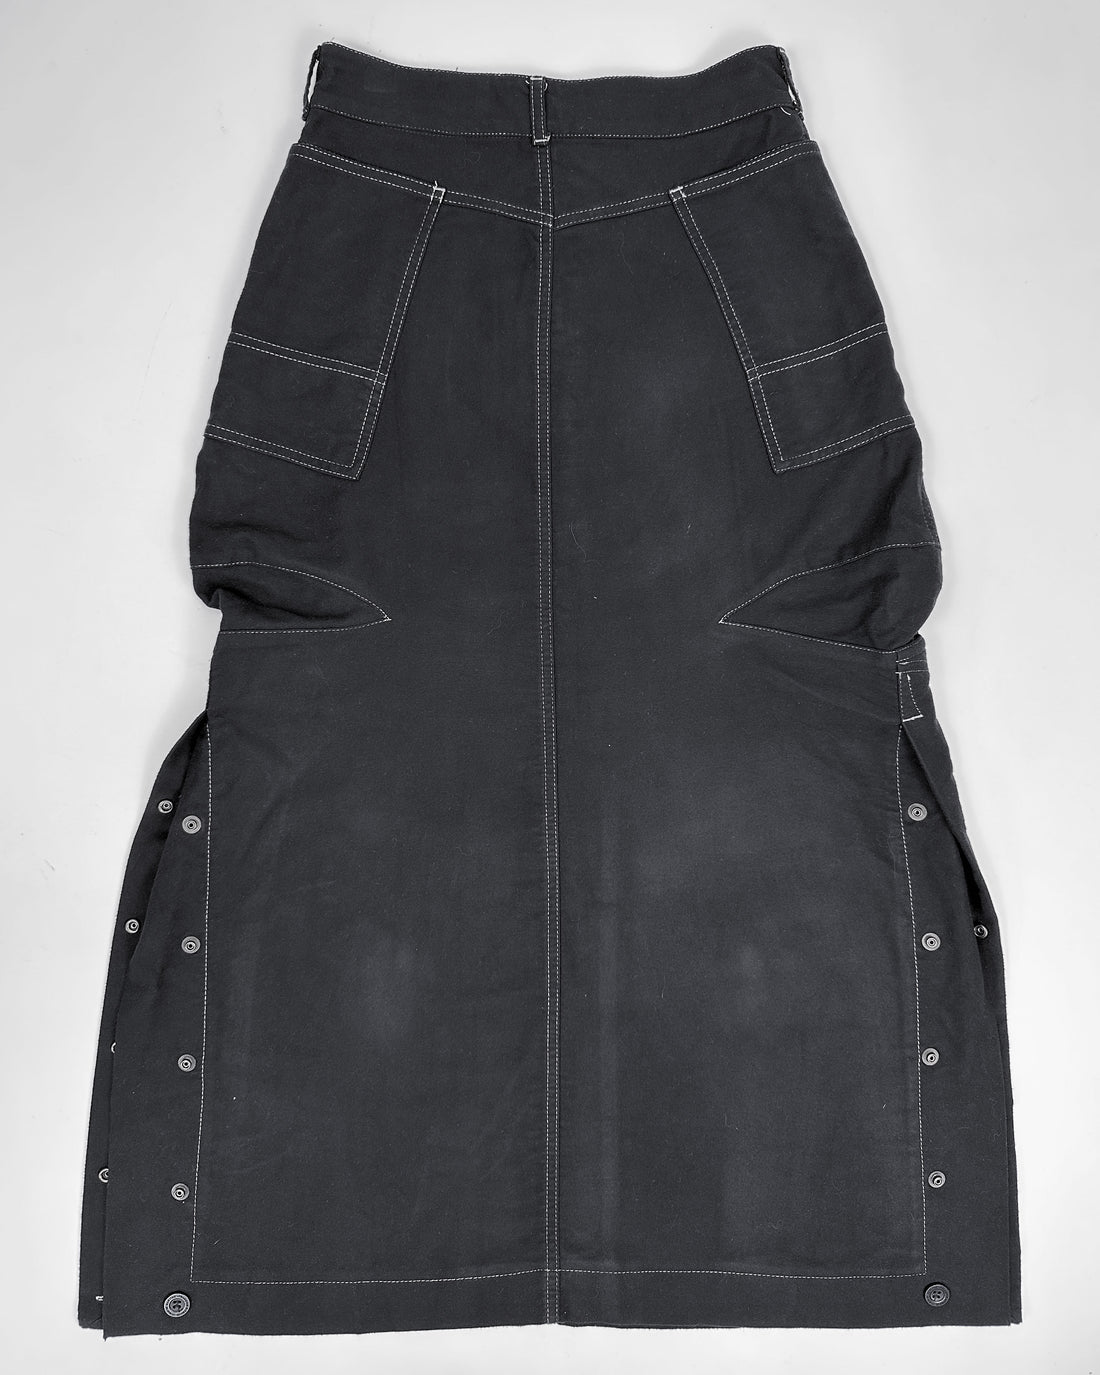 Marithé Francois Girbaud Black Suede-Texture Maxi Skirt 1990's